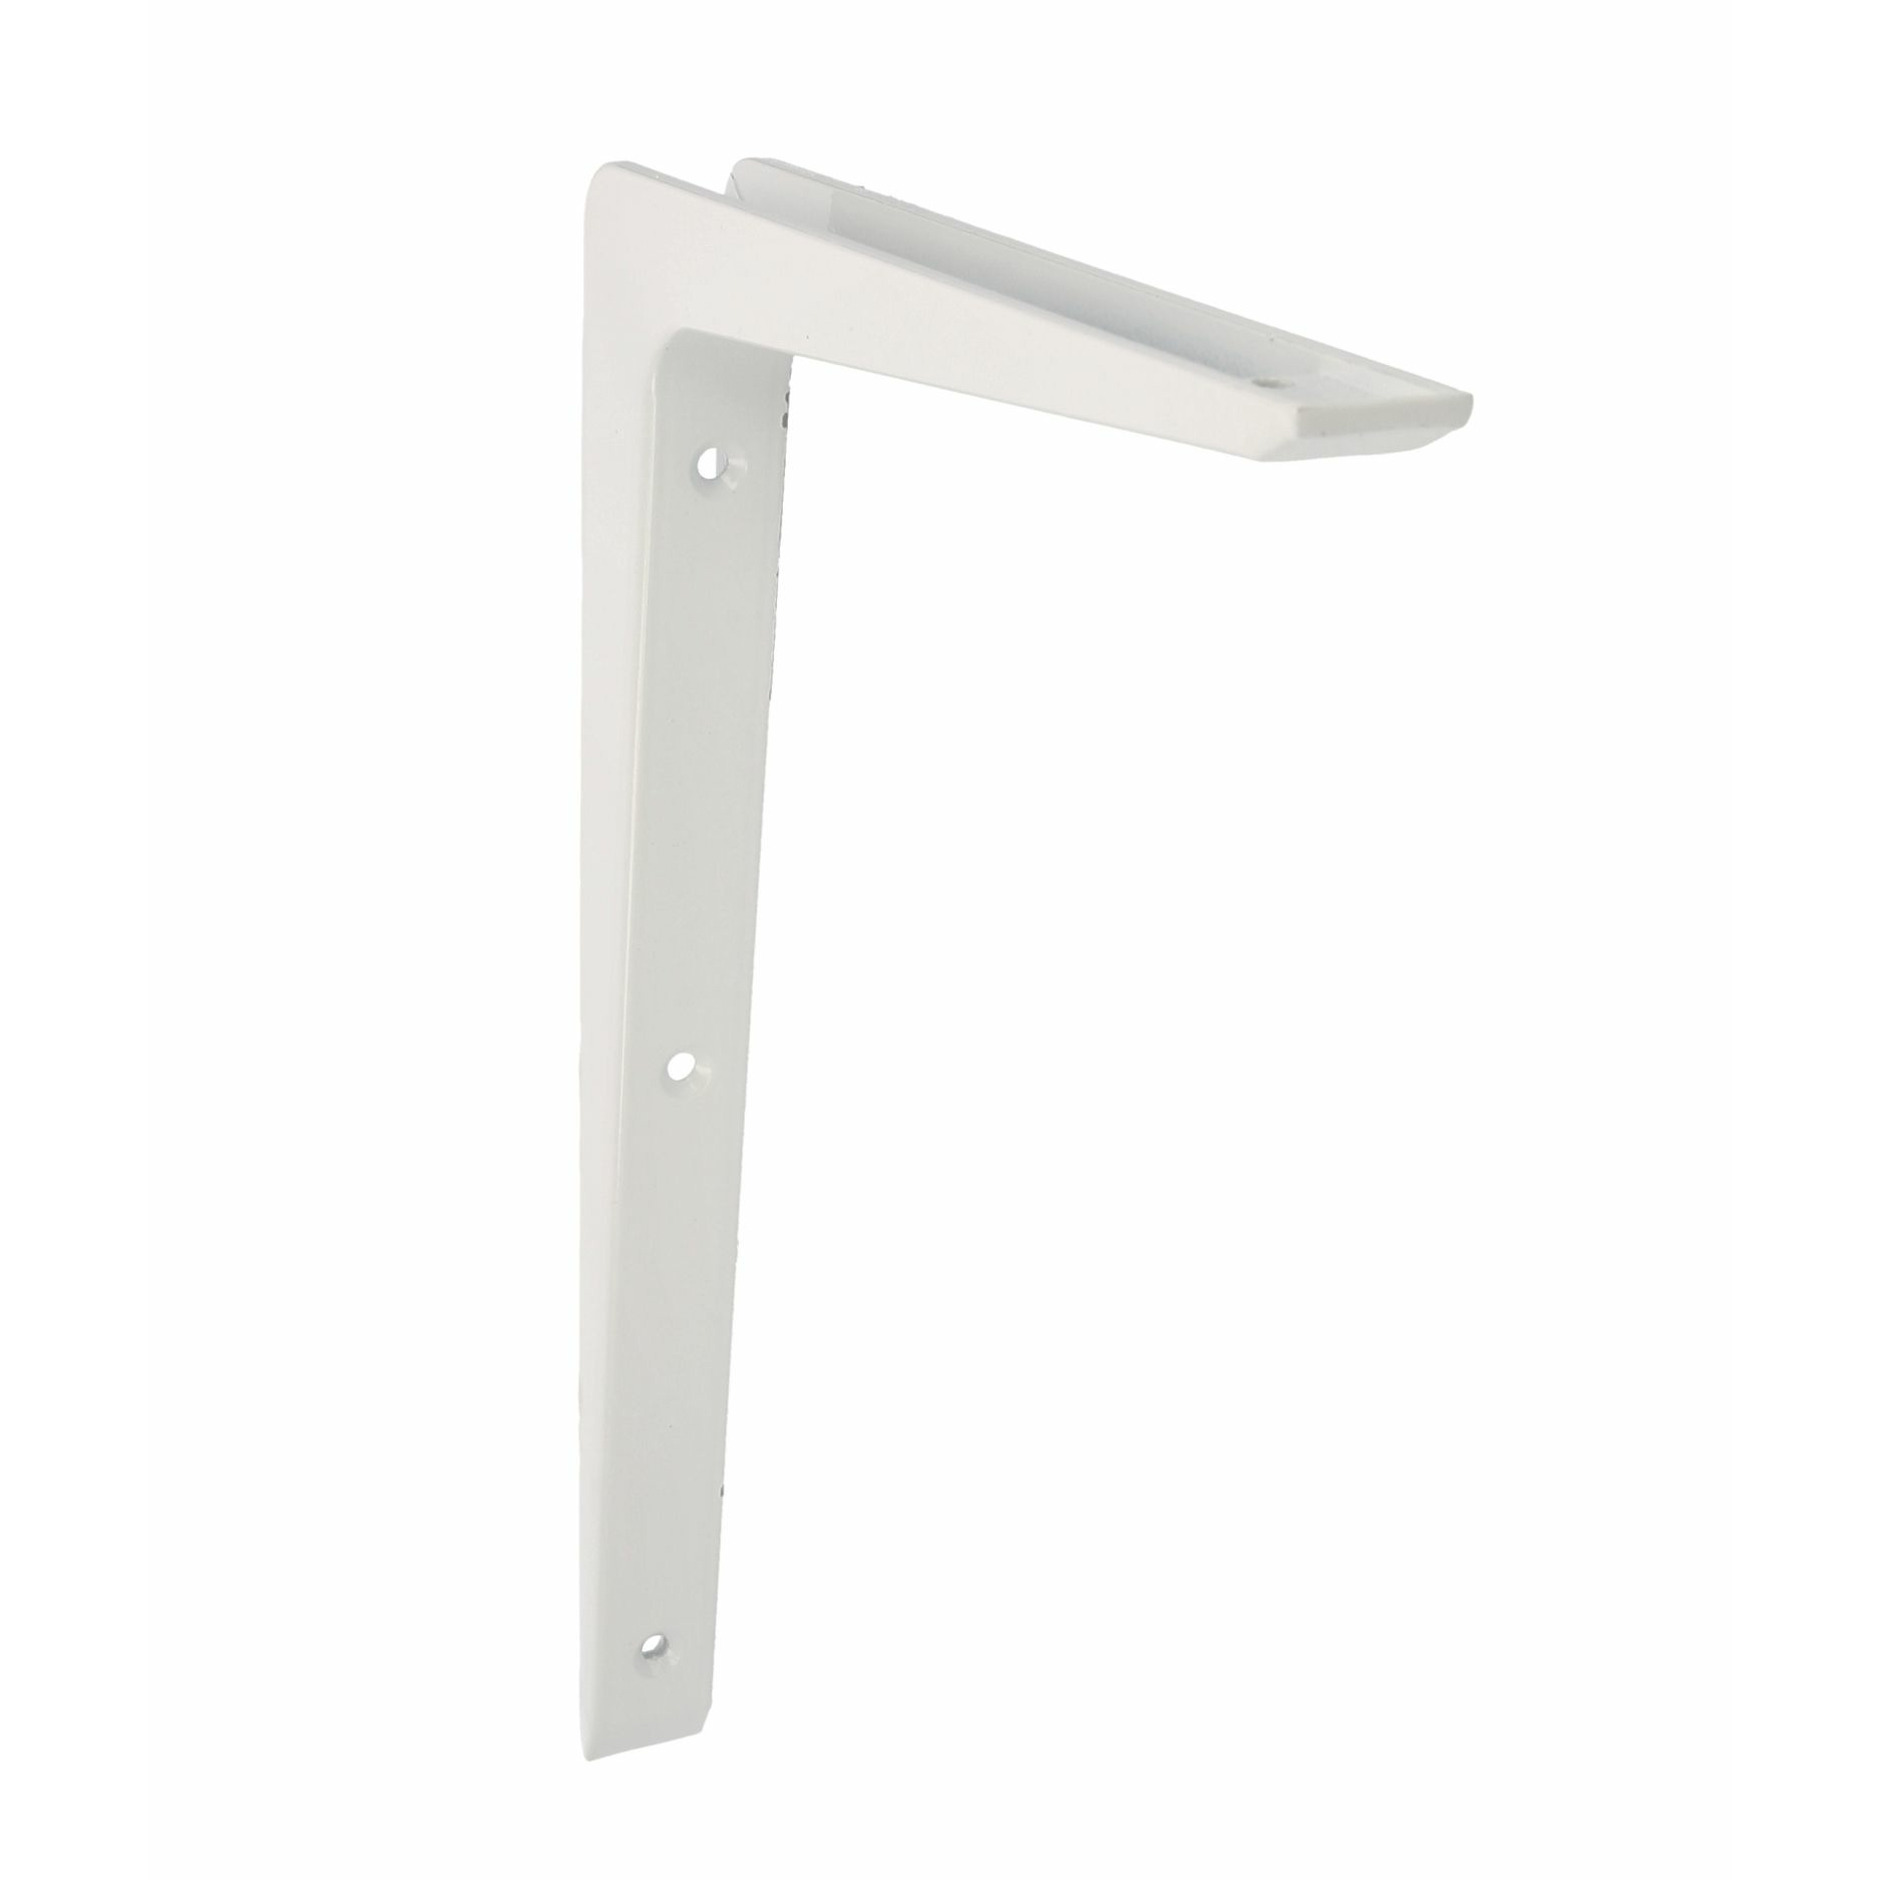 AMIG Plankdrager/planksteun van aluminium - gelakt wit - H300 x B200 mm -